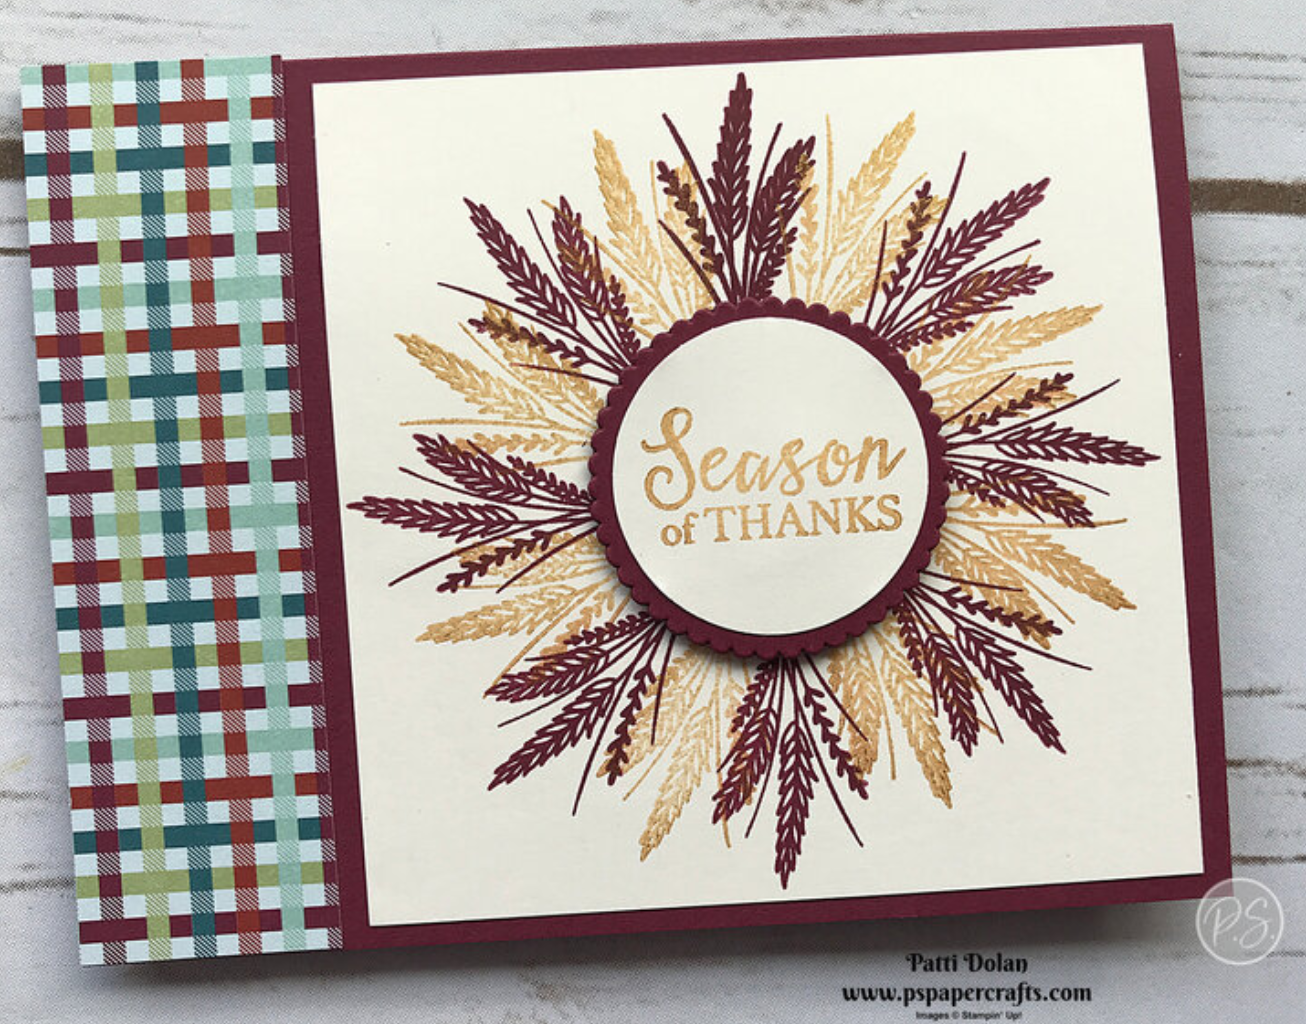 Arrange A Wreath Christmas Card — P.S. Paper Crafts - Arrange A Wreath Christmas Card — P.S. Paper Crafts -   16 diy thanksgiving cards handmade ideas